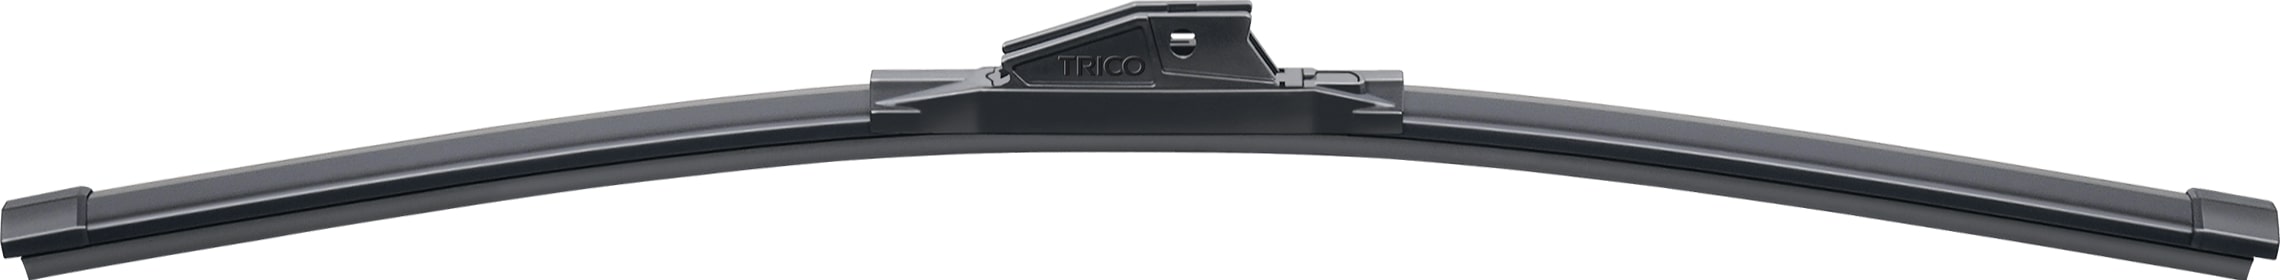 TRICO Wiper Blades - 35 Series ICE 20"